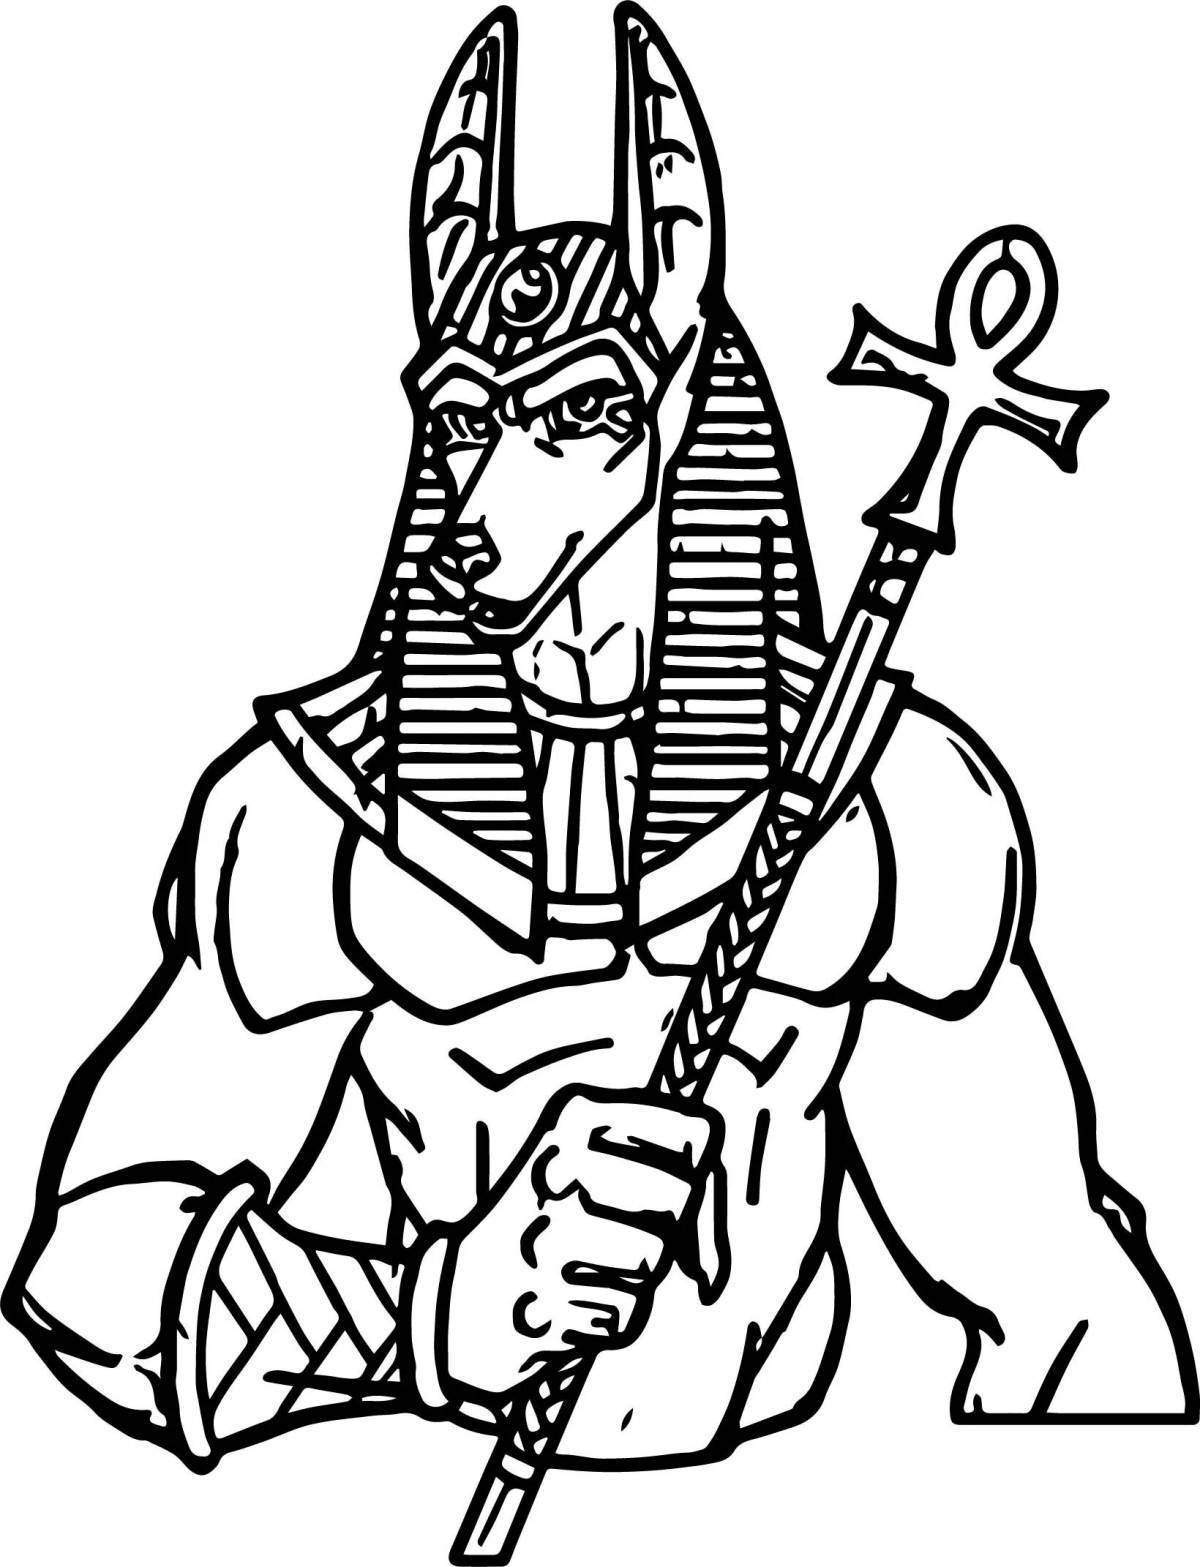 Anubis god of ancient egypt #11